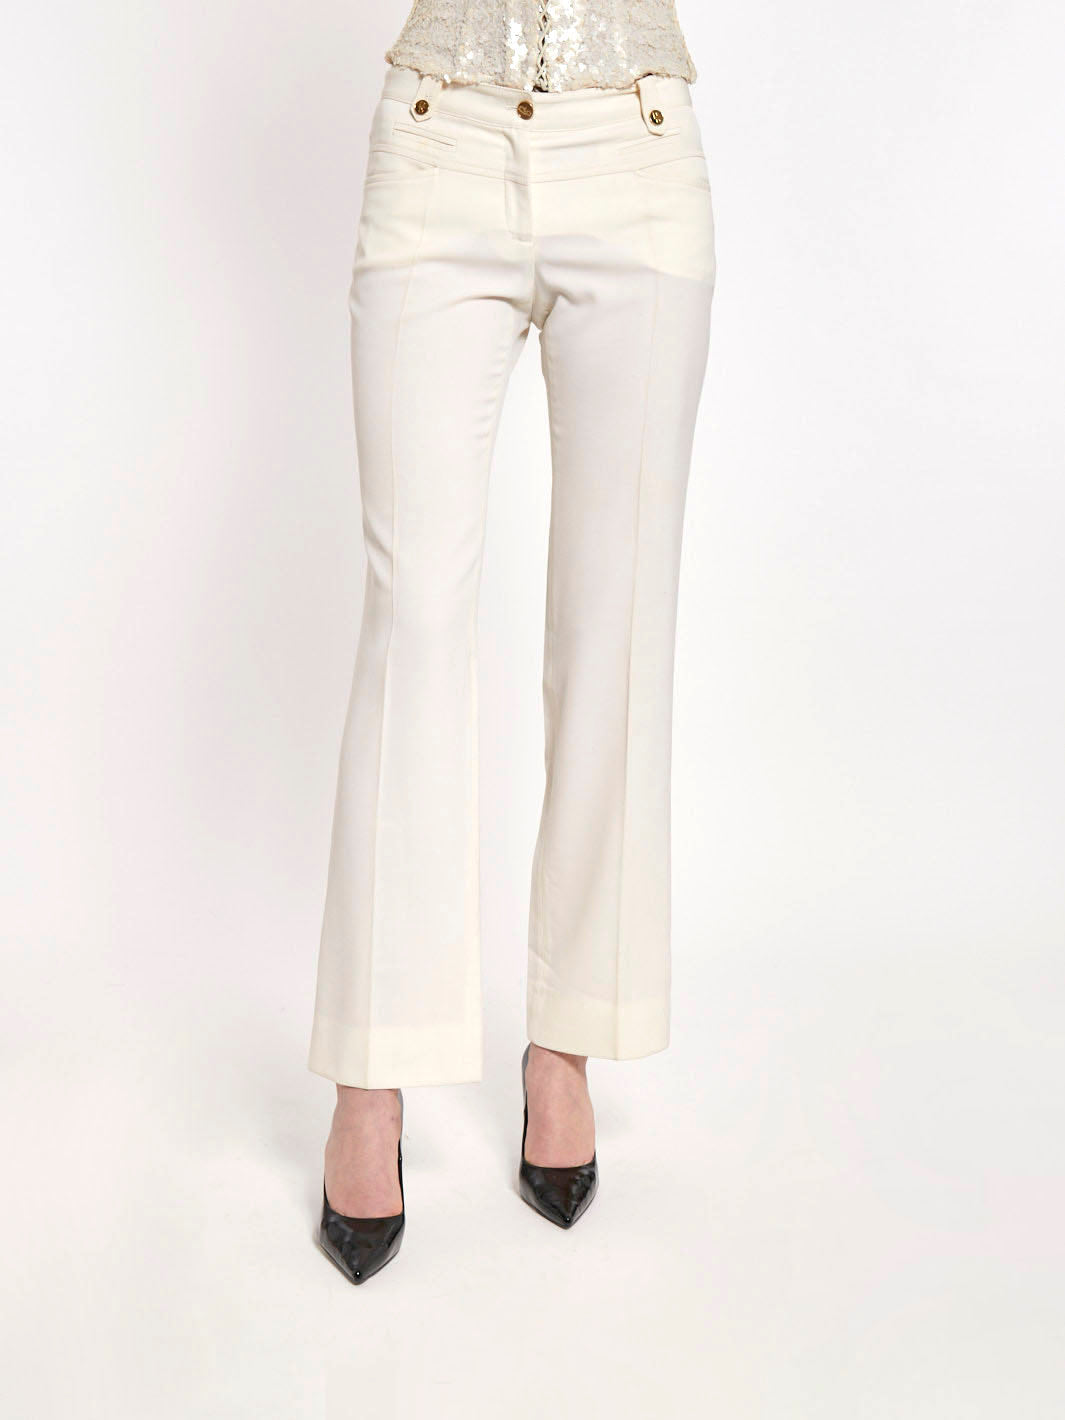 Y2K Dolce&Gabbana pants in cream-coloured wool